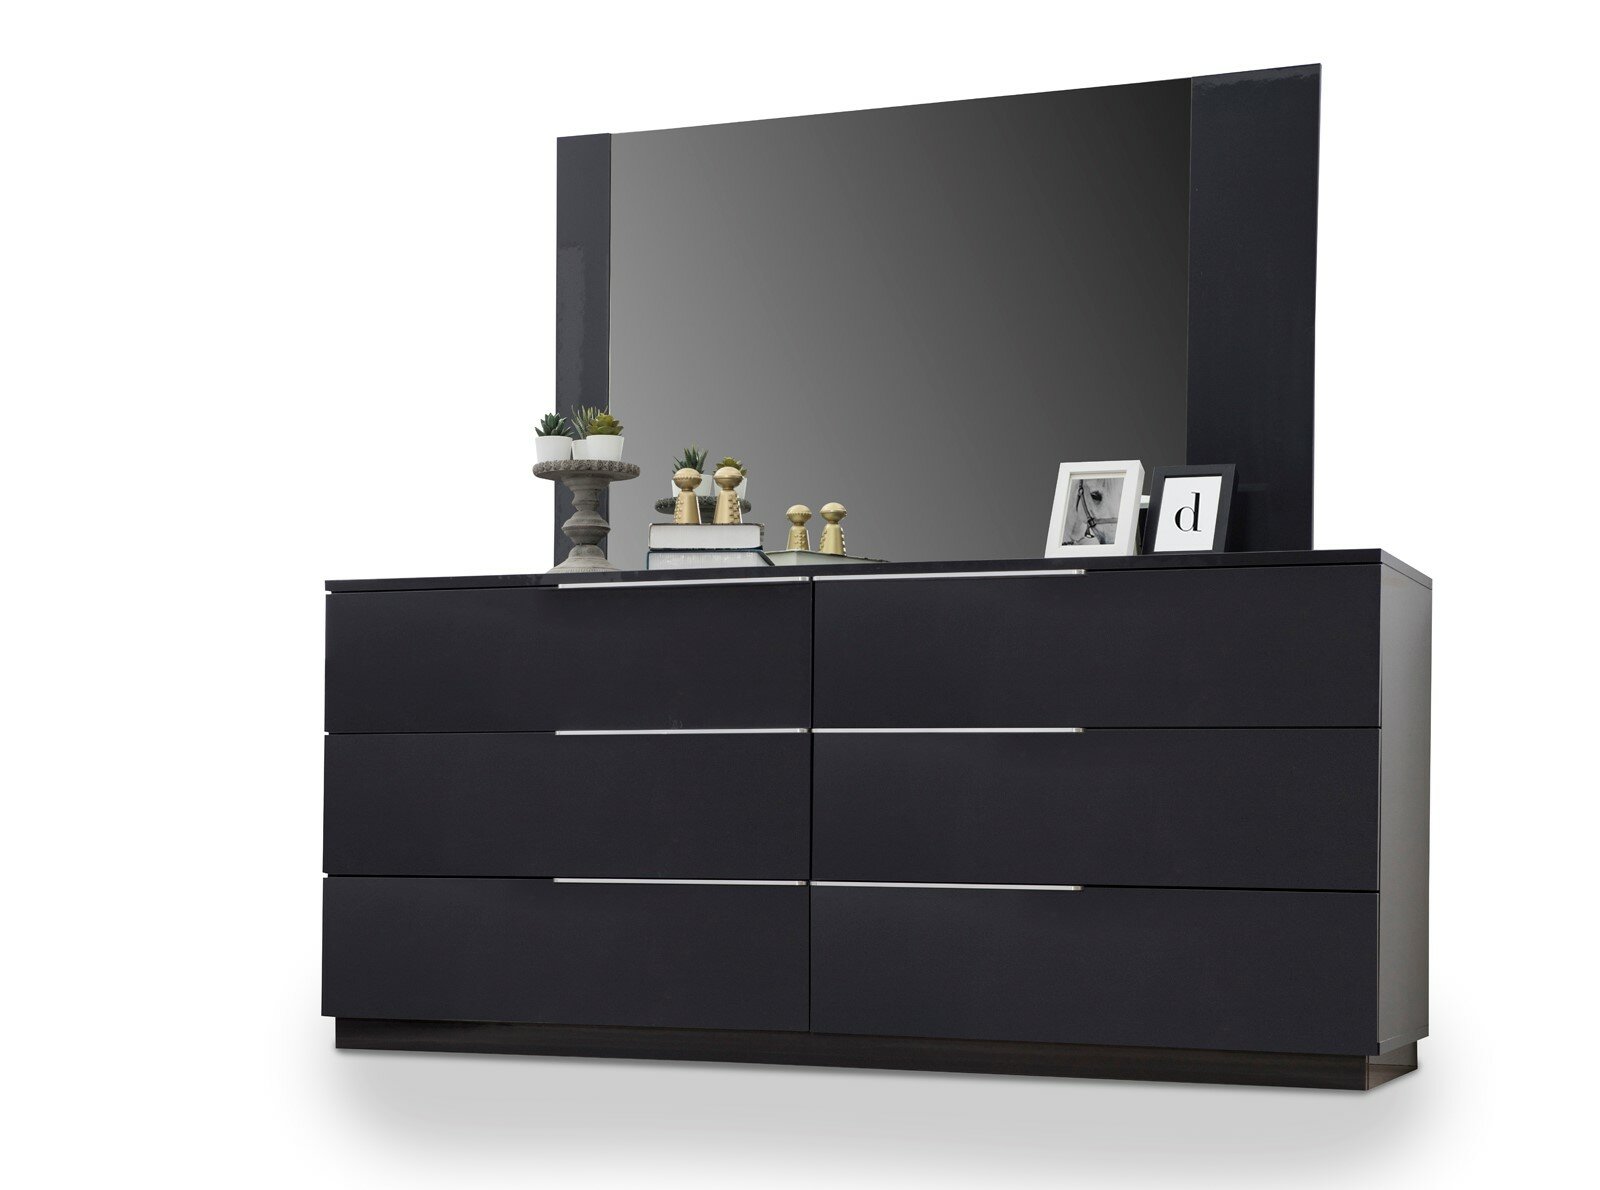 Orren Ellis Eastford 6 Drawer Double Dresser With Mirror Wayfair